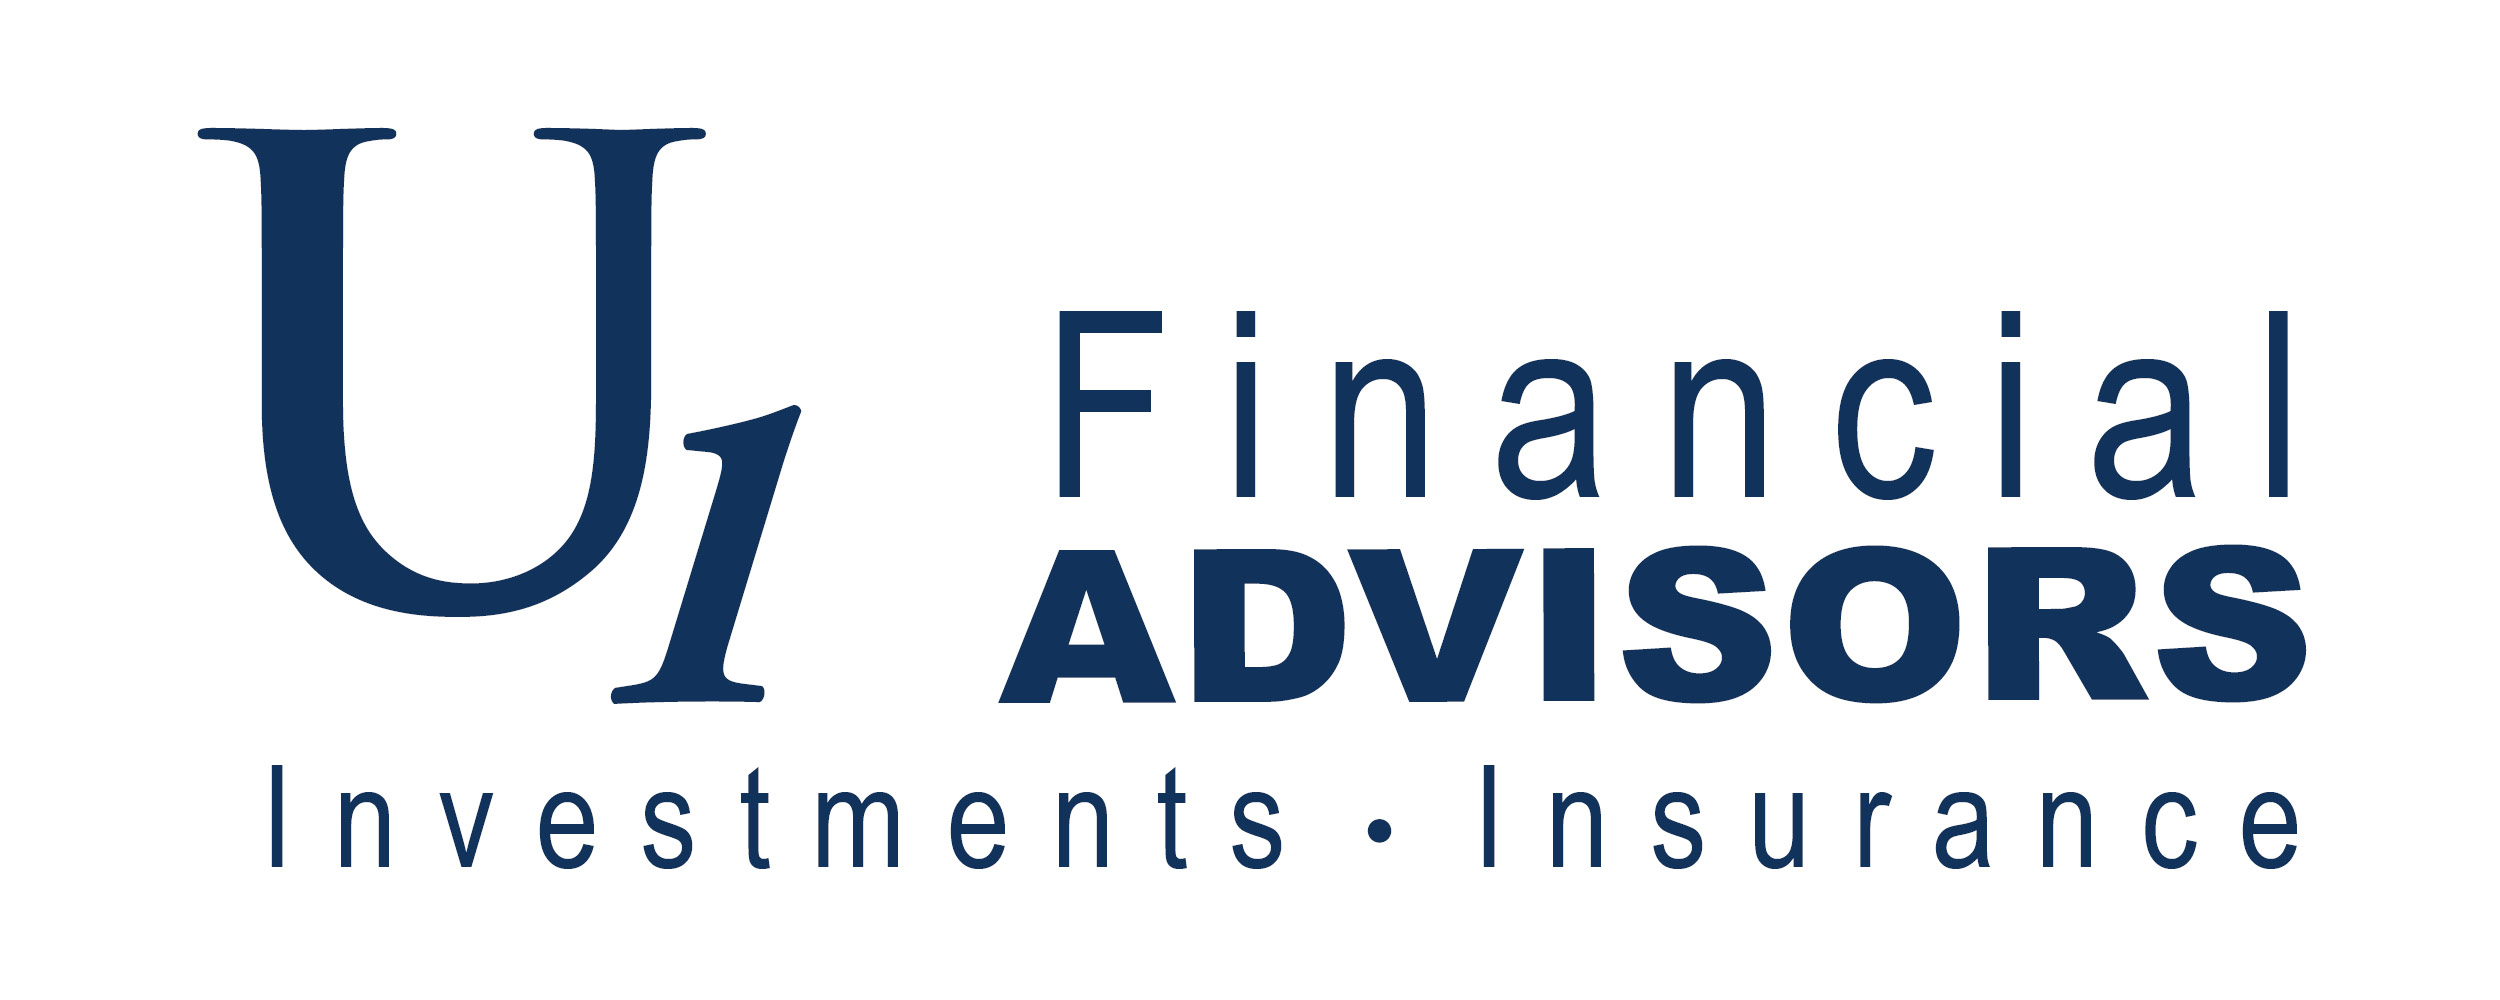 Universal 1 Credit Union Financial Advisors